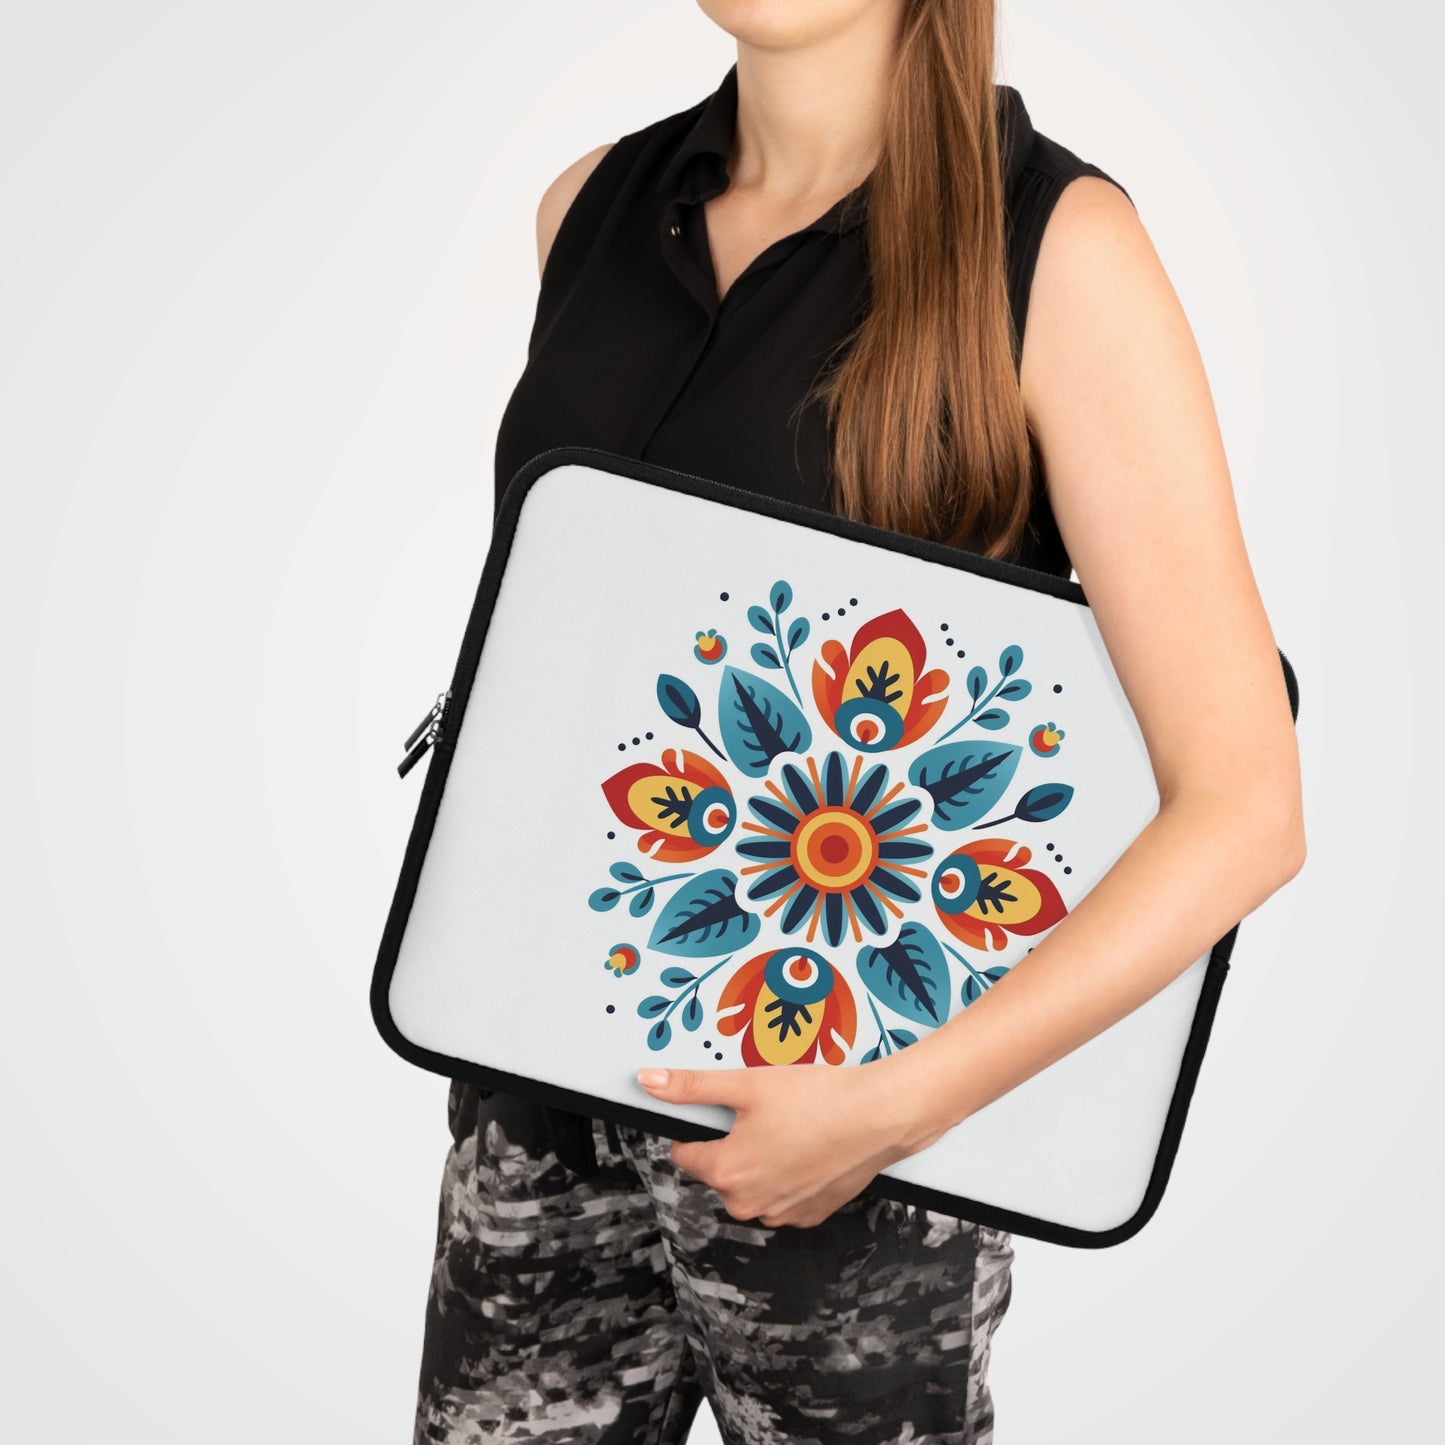 Folk Art Flower Laptop Sleeve, Boho Blooms Tablet Sleeve, Cottagecore iPad Cover, Scandinavian MacBook Sleeve, Swedish Zipper Pouch